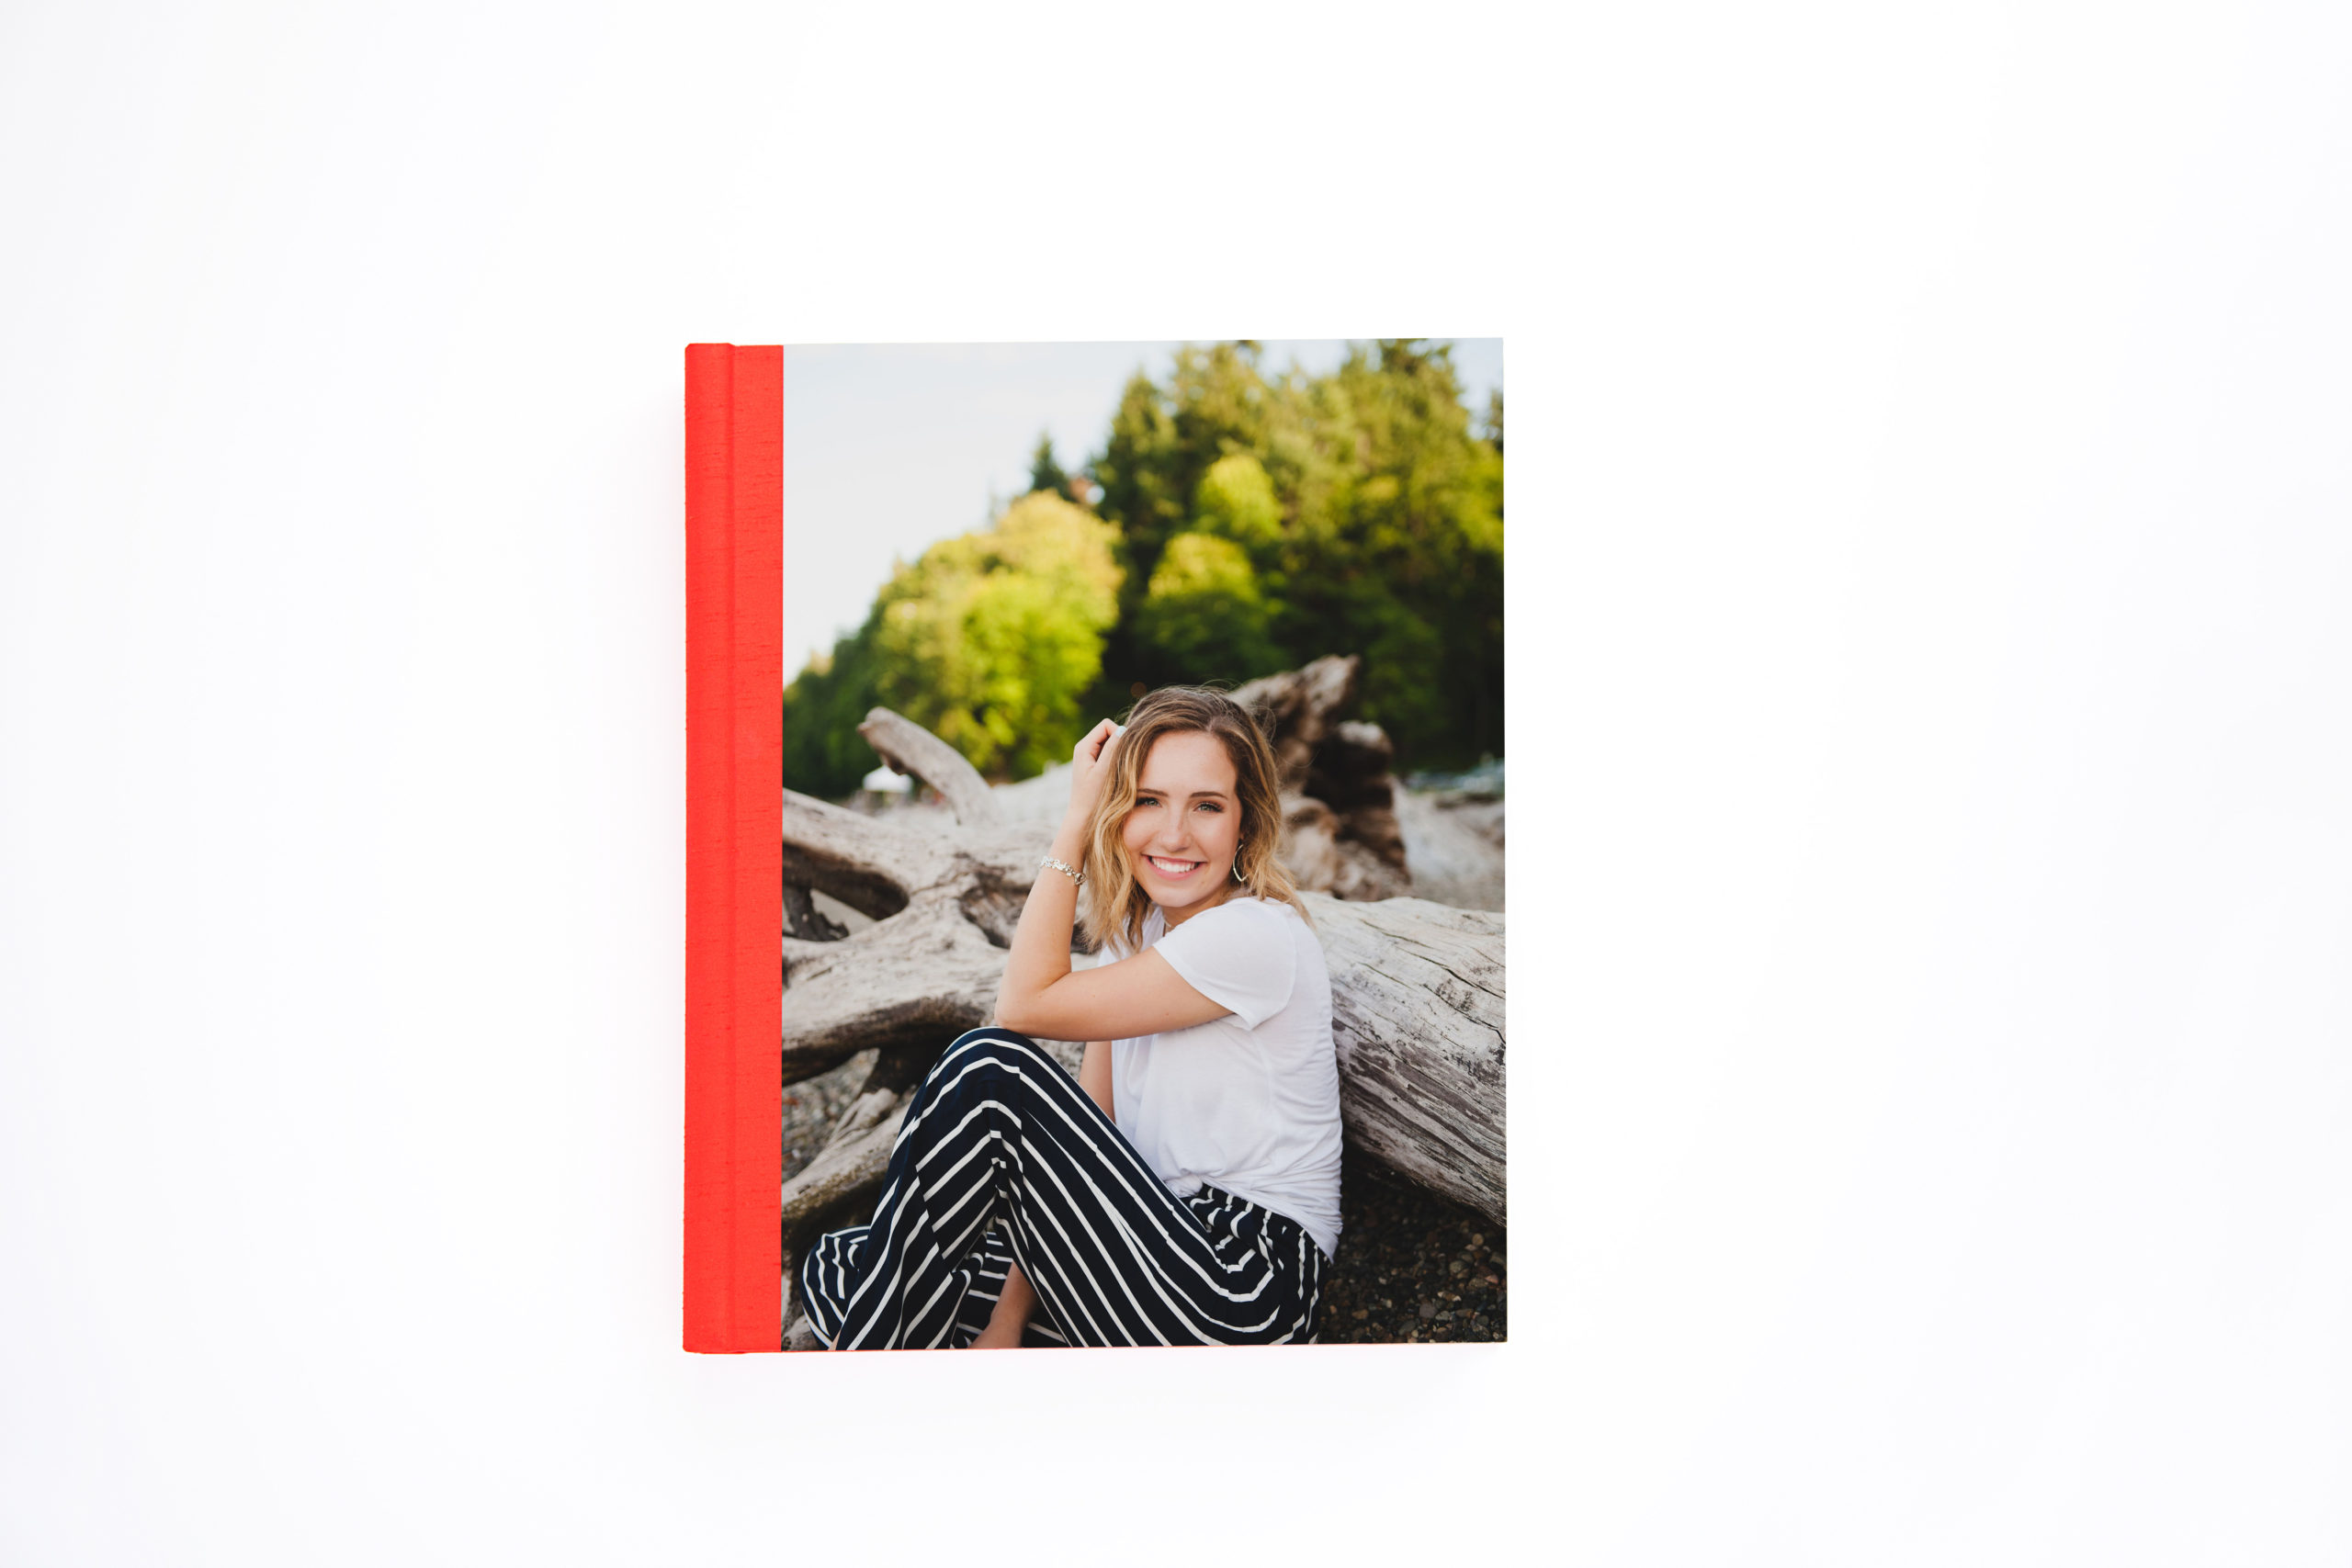 Album Inspiration for Senior Portraits | How to Show Off Your Senior Portraits, Keepsake Albums, Heirloom Products | Tacoma Senior Photographer Amanda Howse